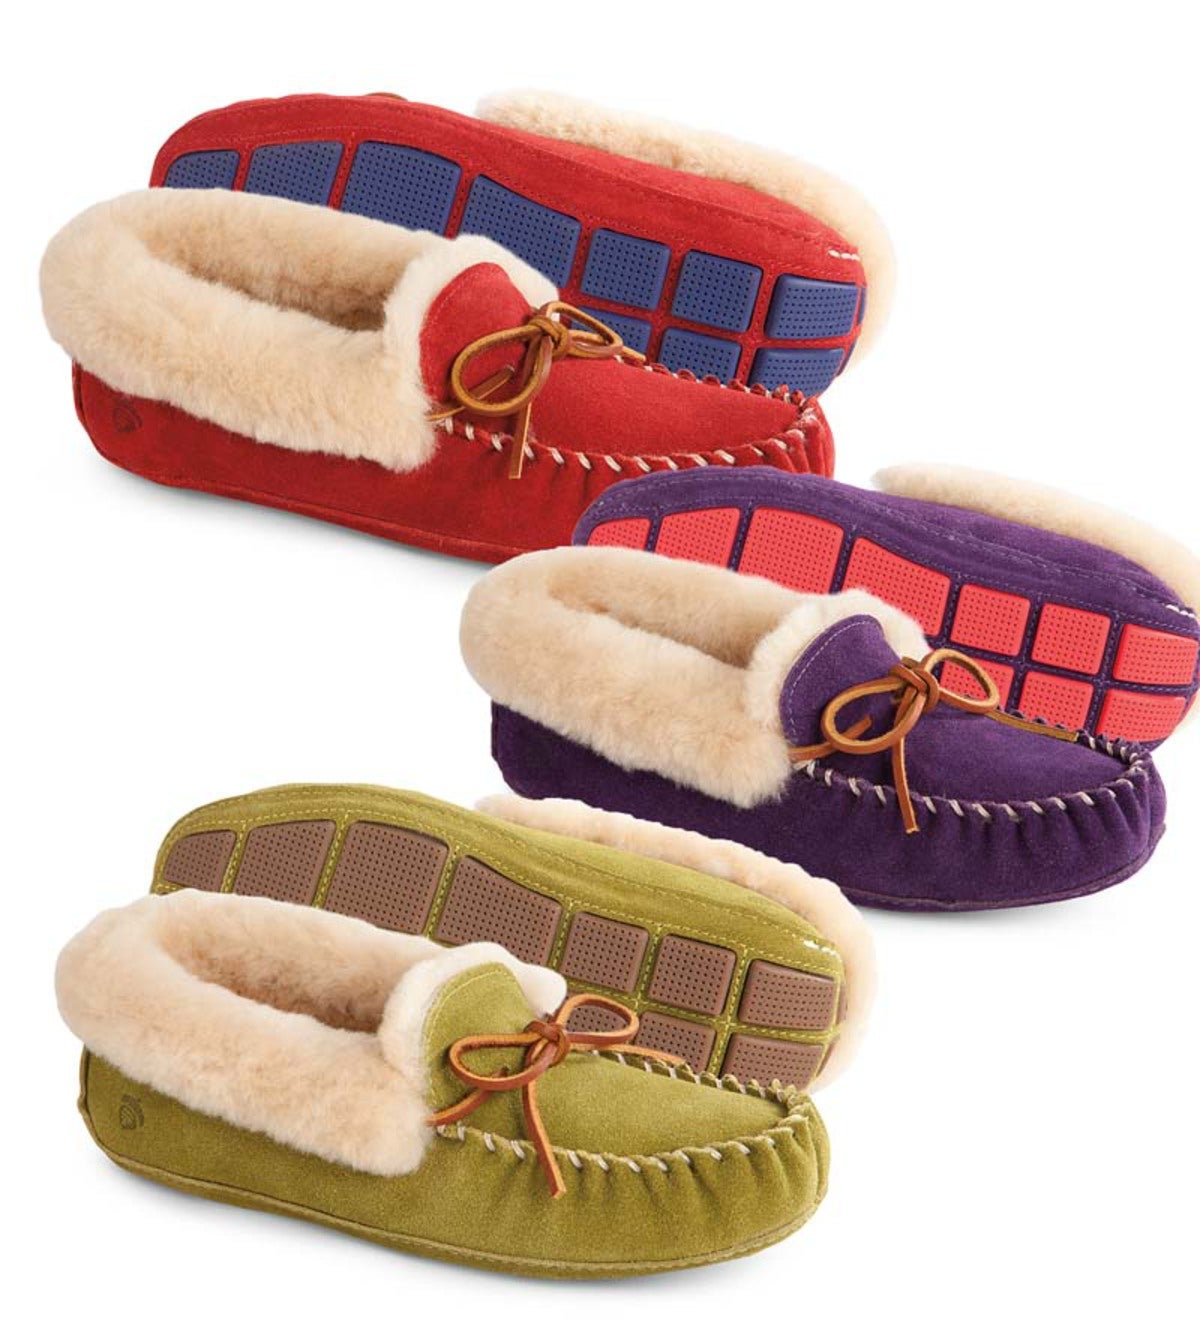 acorn slippers clearance